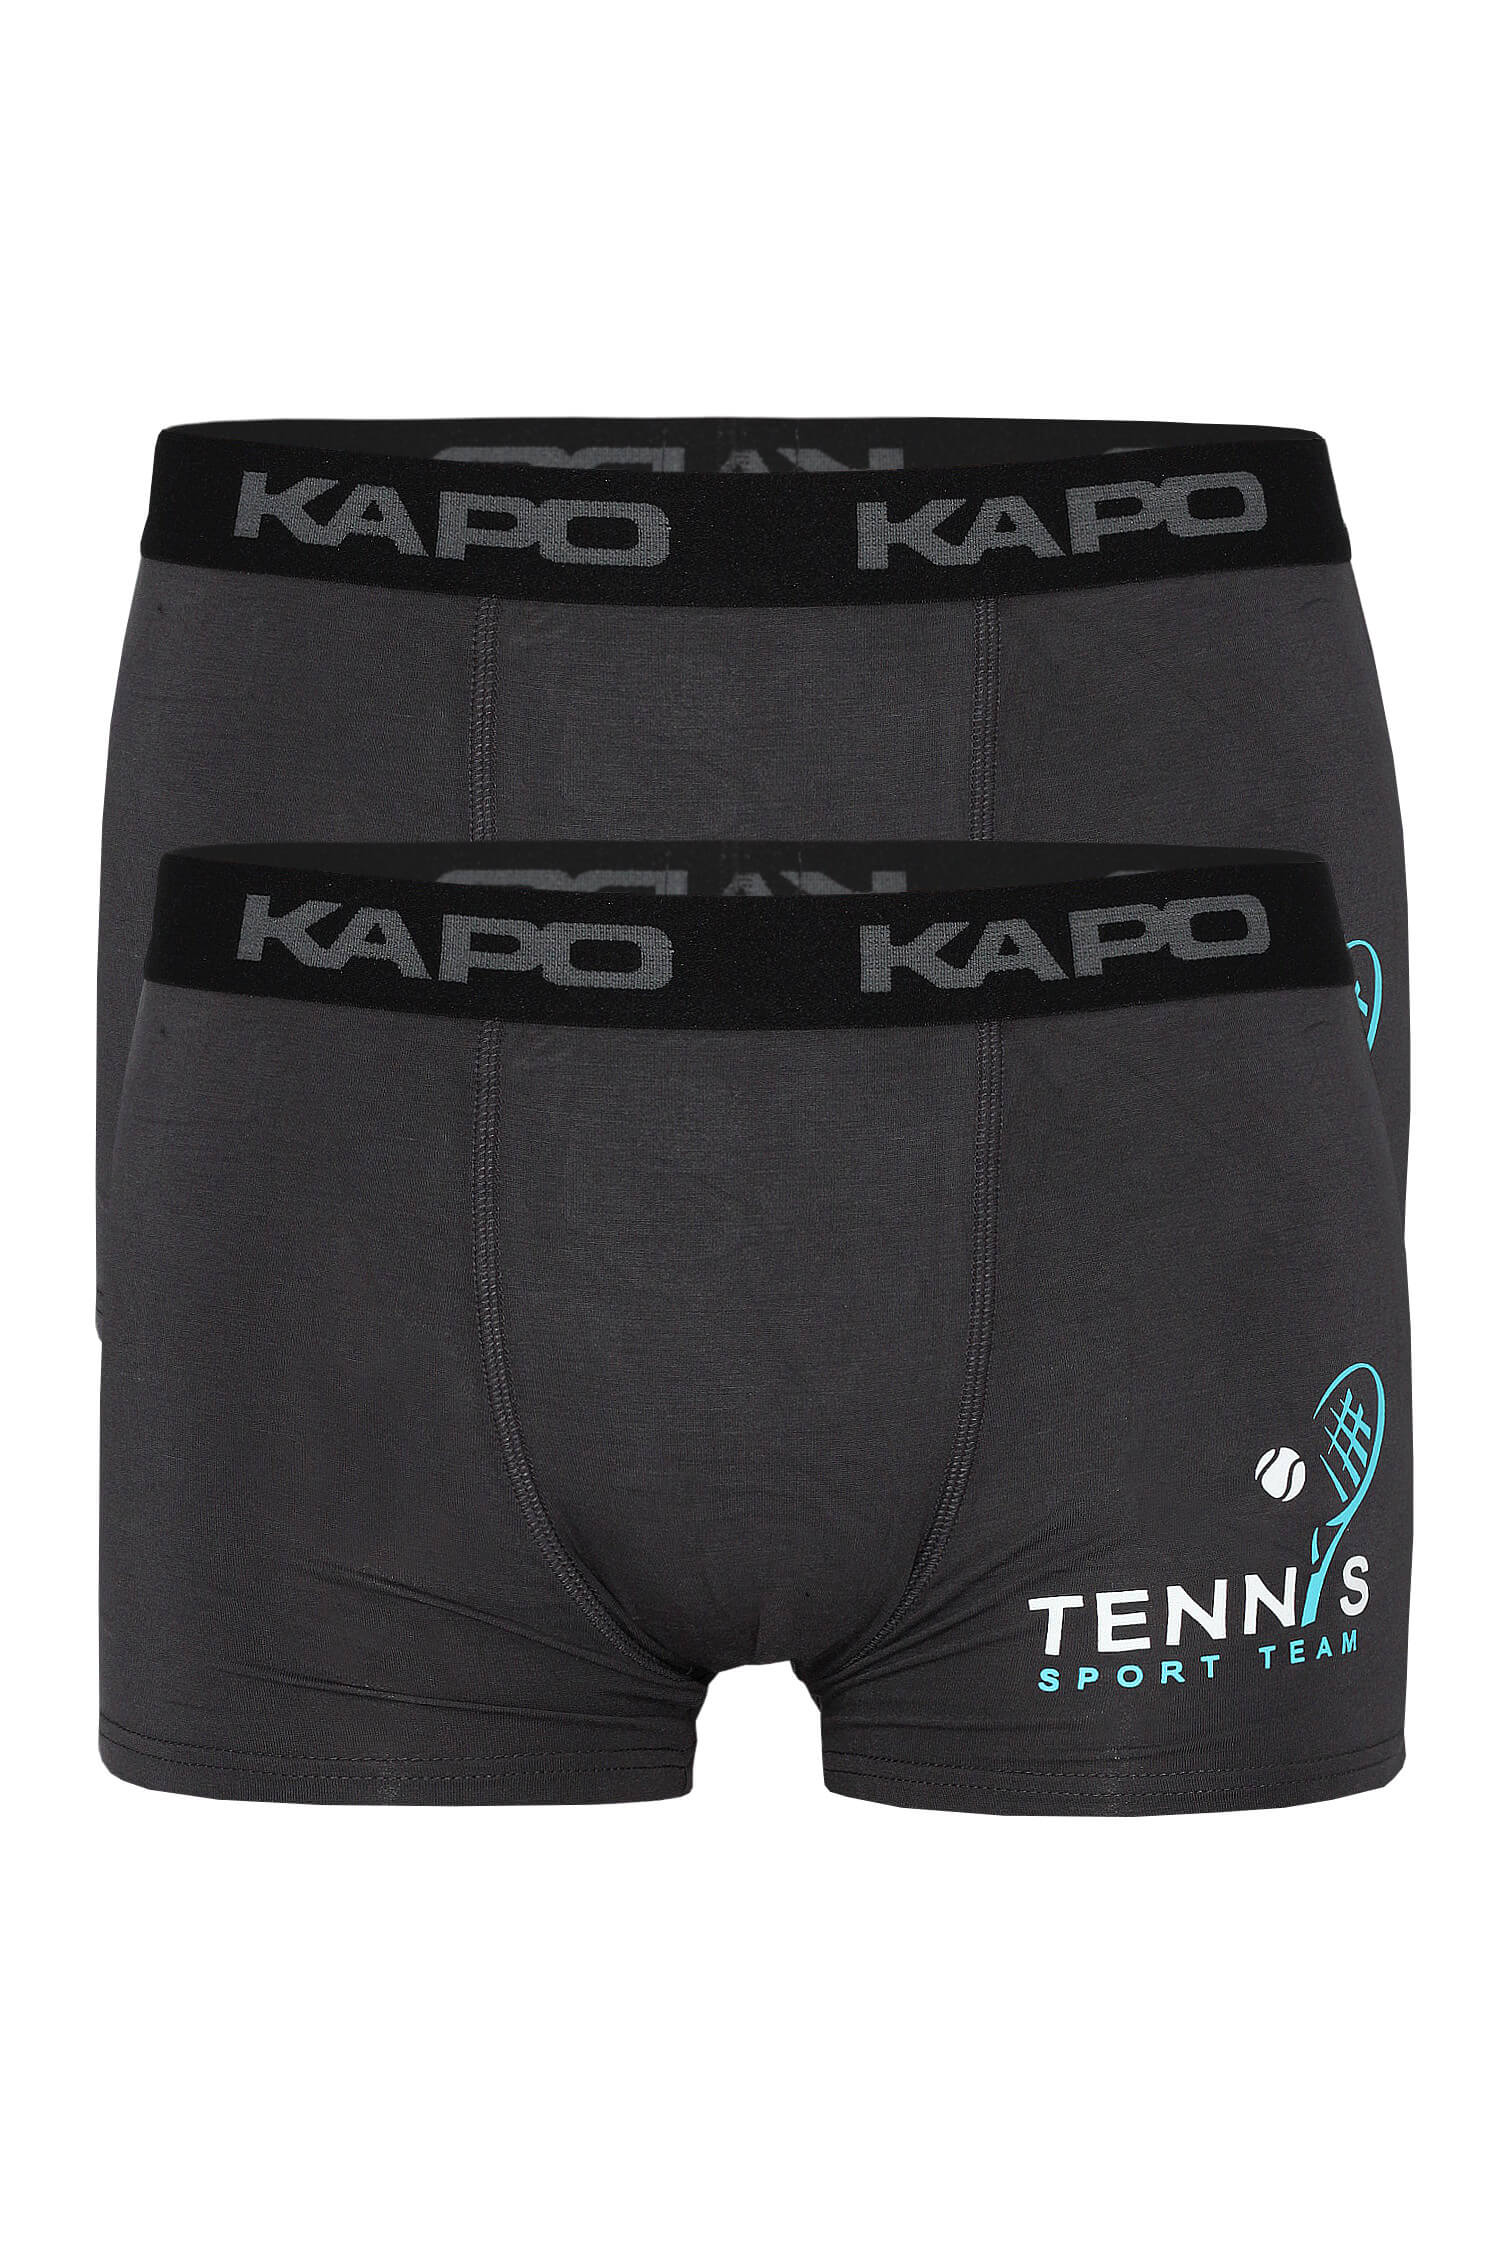 Rafael Kapo tenis boxerky - dvojbal XL tmavě šedá